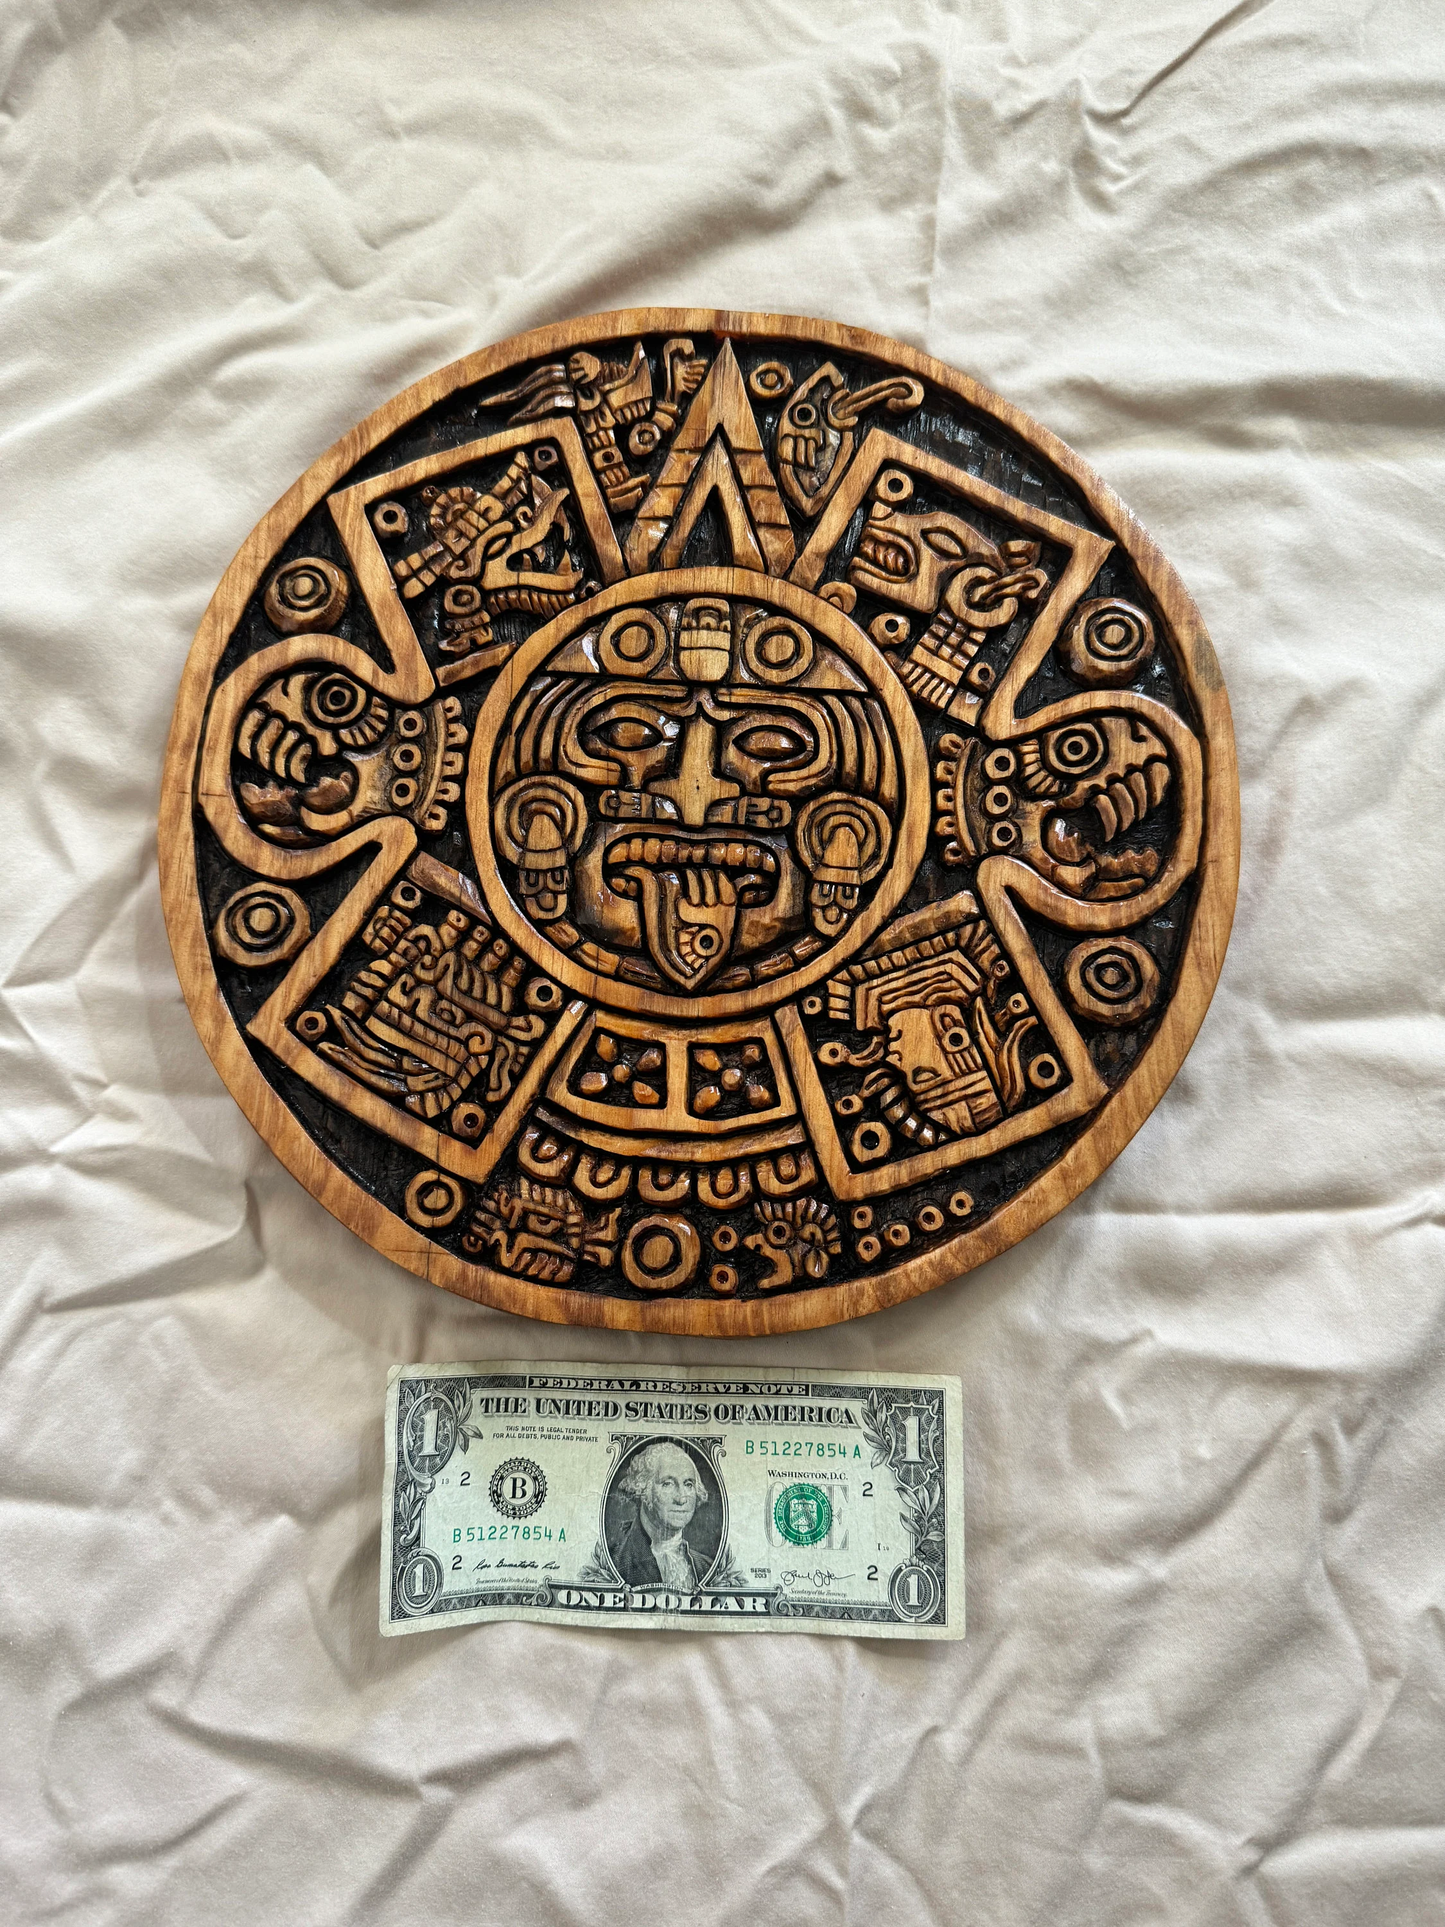 Wood Carved Tonatiuh Aztec Sun God Plaque, Disc, Mexico 12", Aztec calendar face, Mexican Art, Ancient Mexico Indians, Sol, Sacrifice